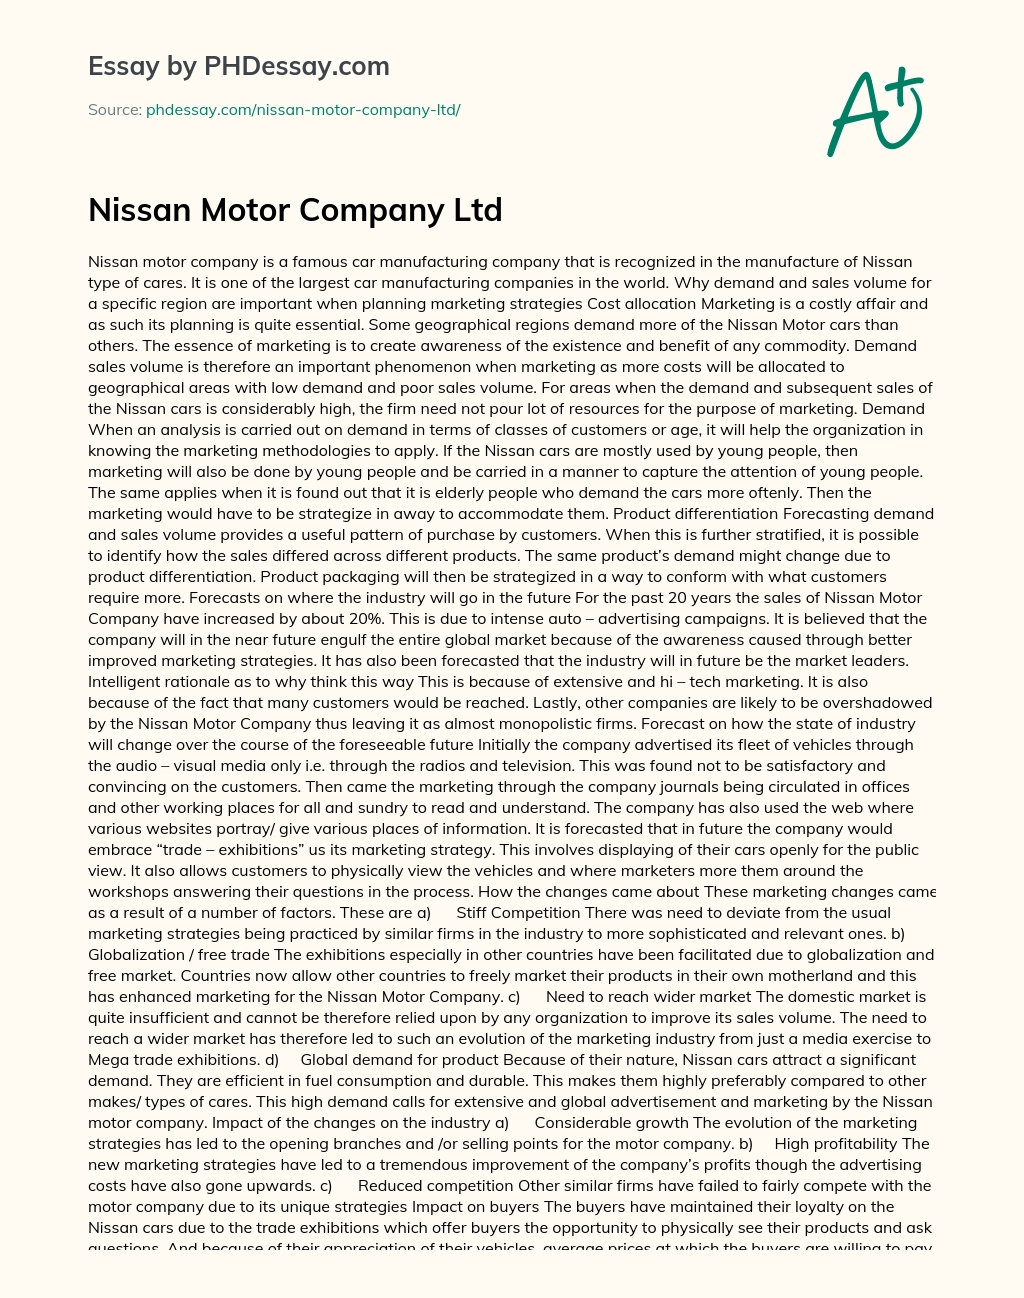 Nissan Motor Company Ltd essay